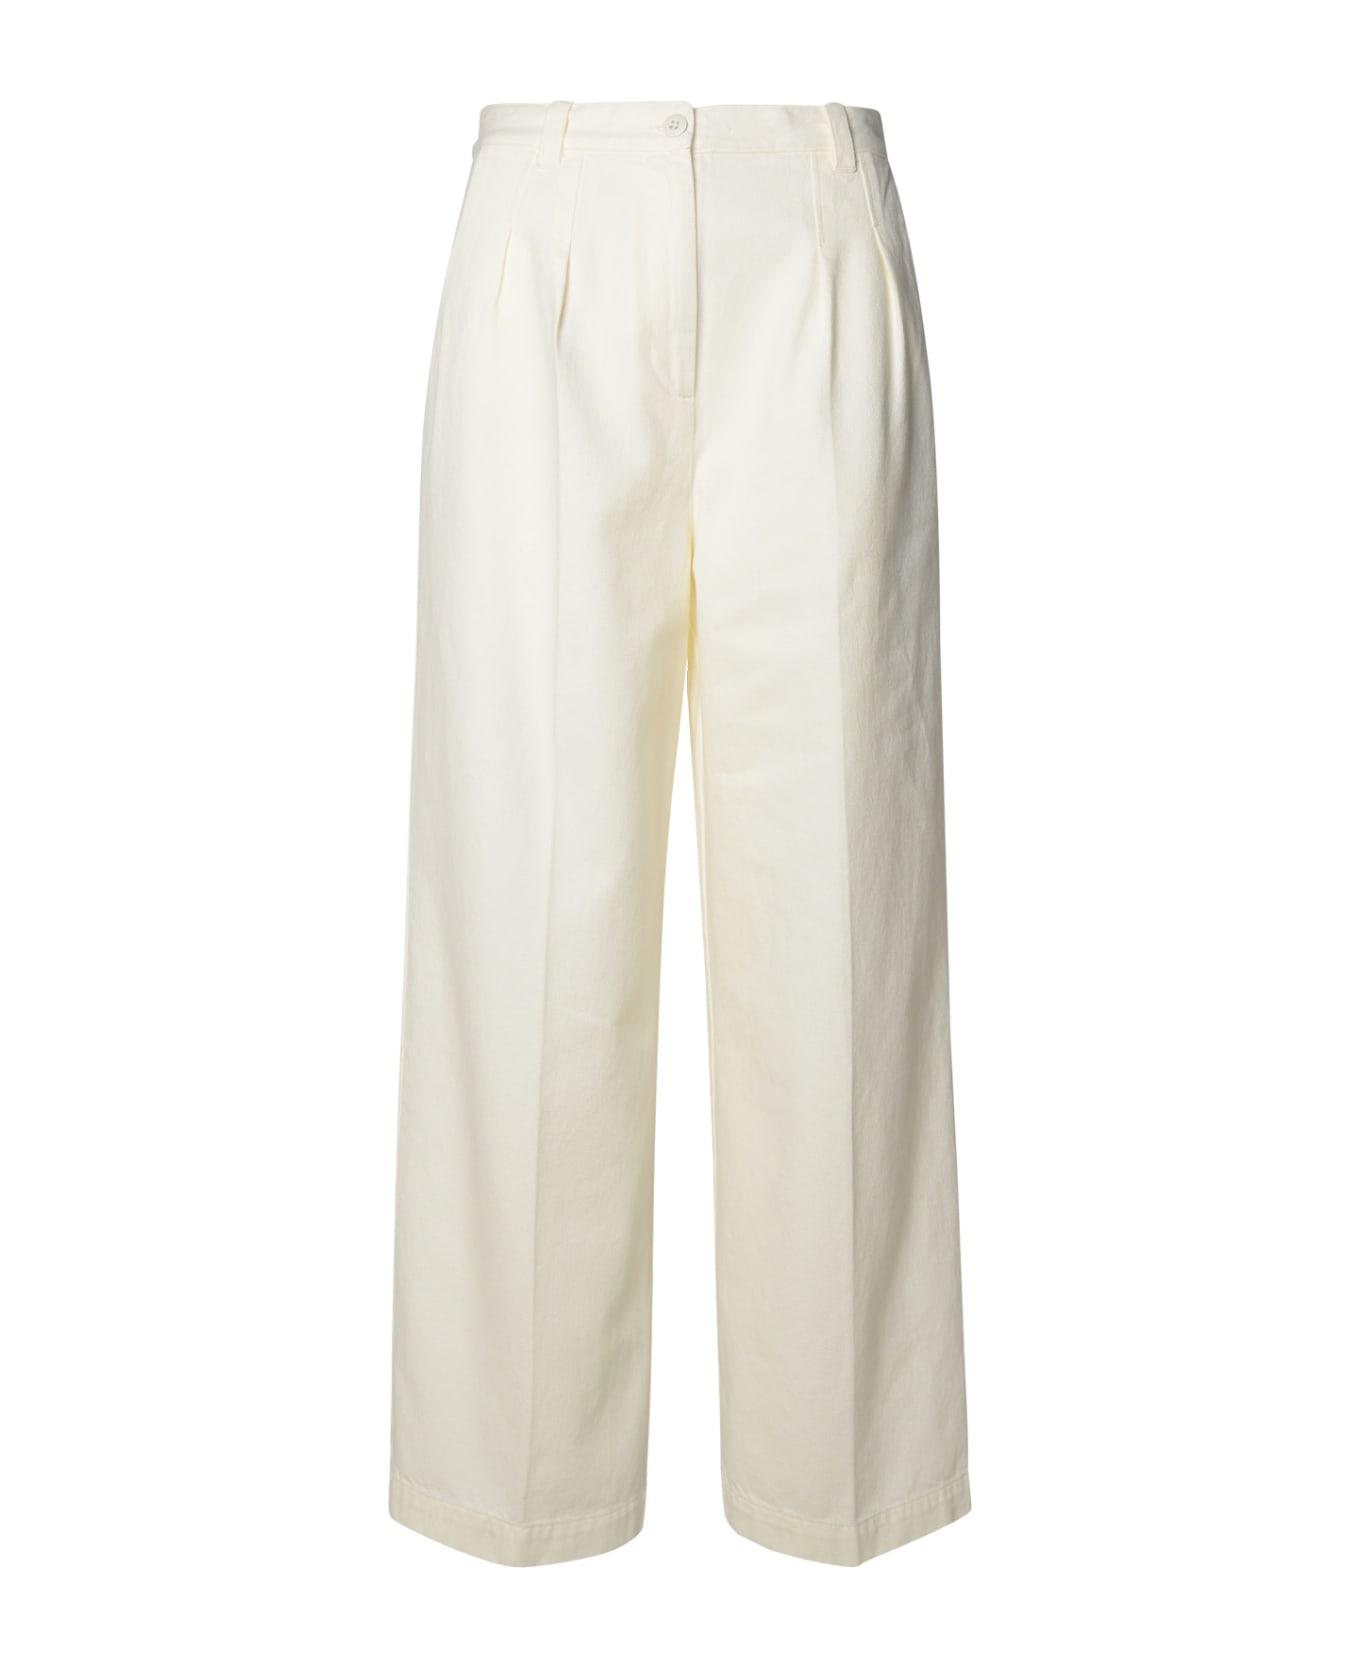 A.P.C. White Cotton Pants - OFF WHITE ボトムス